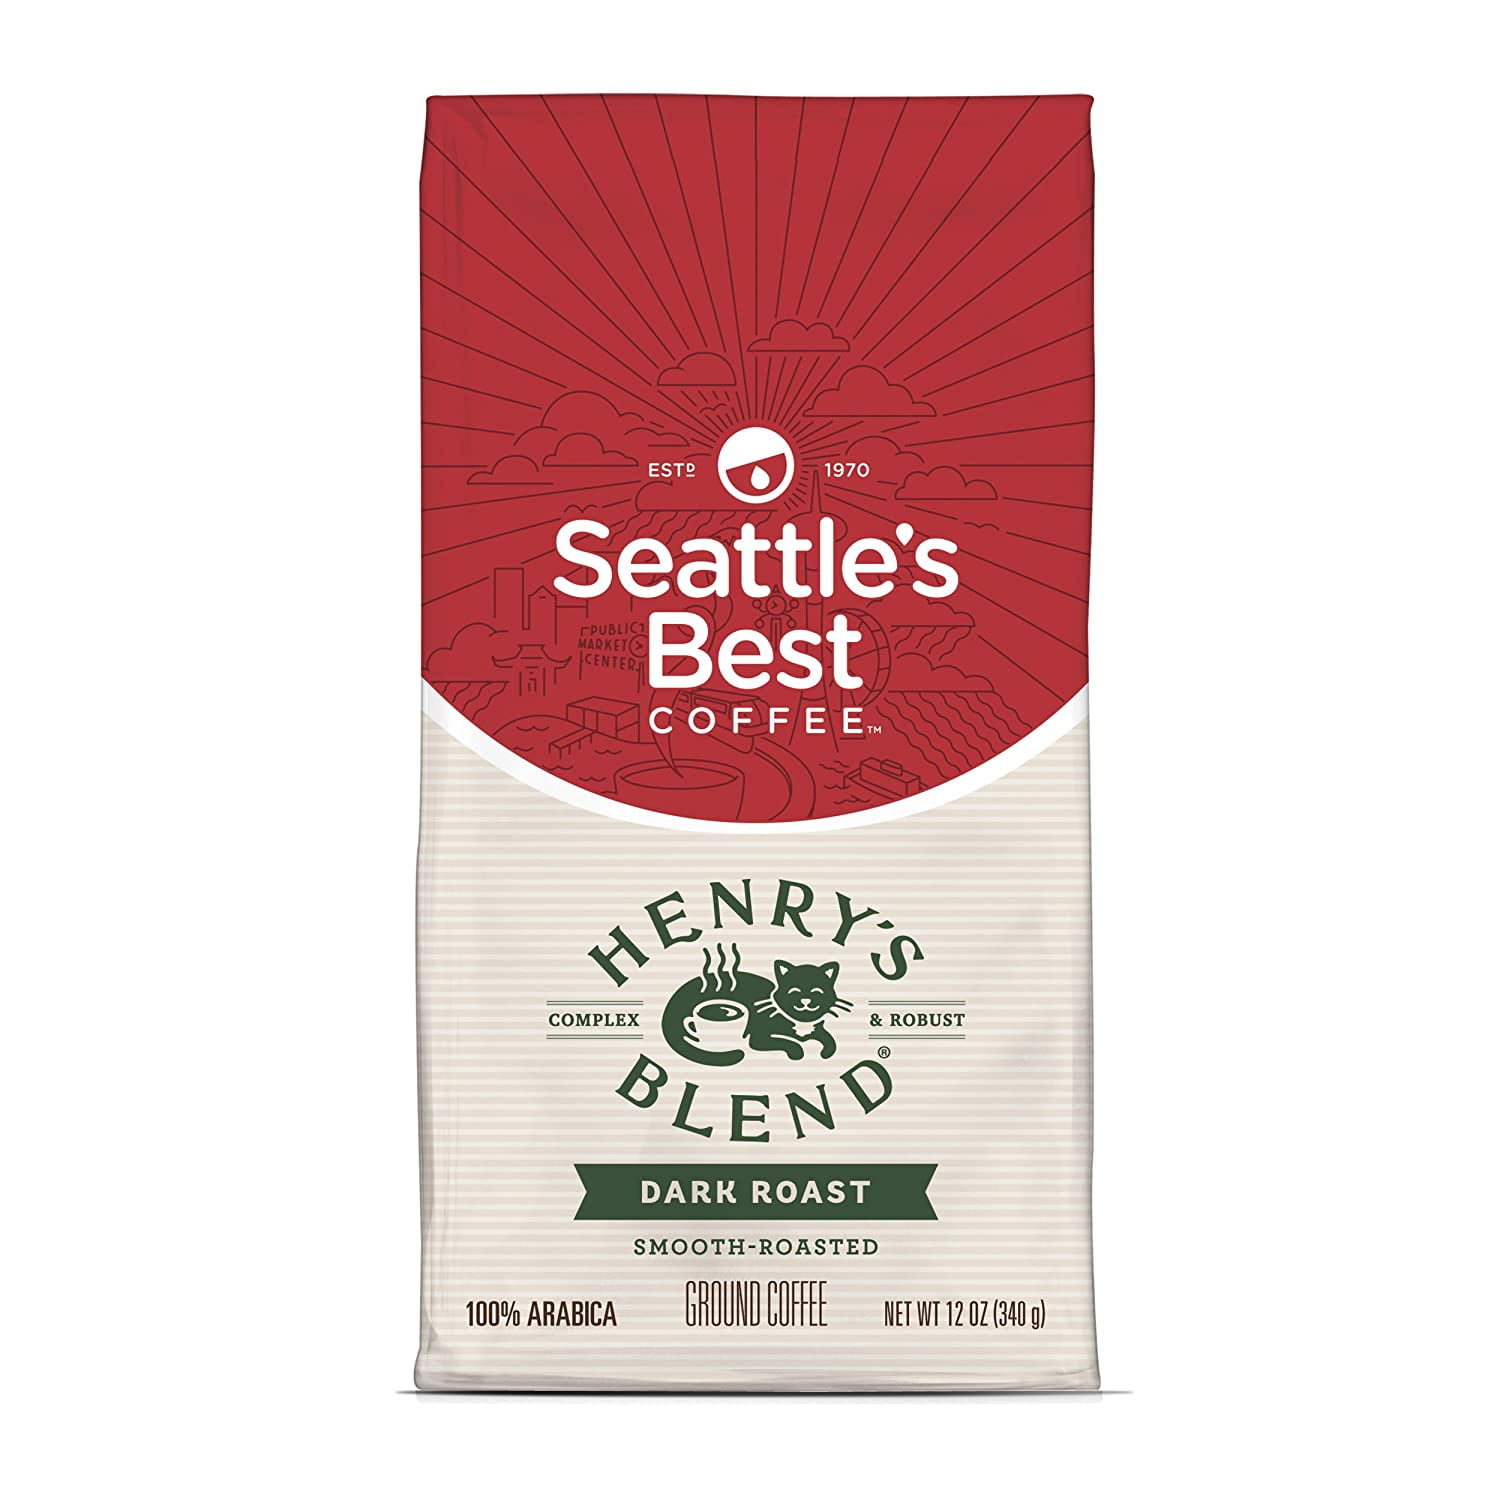 Seattles Best Coffee Henrys Blend Dark Roast Ground Coffee